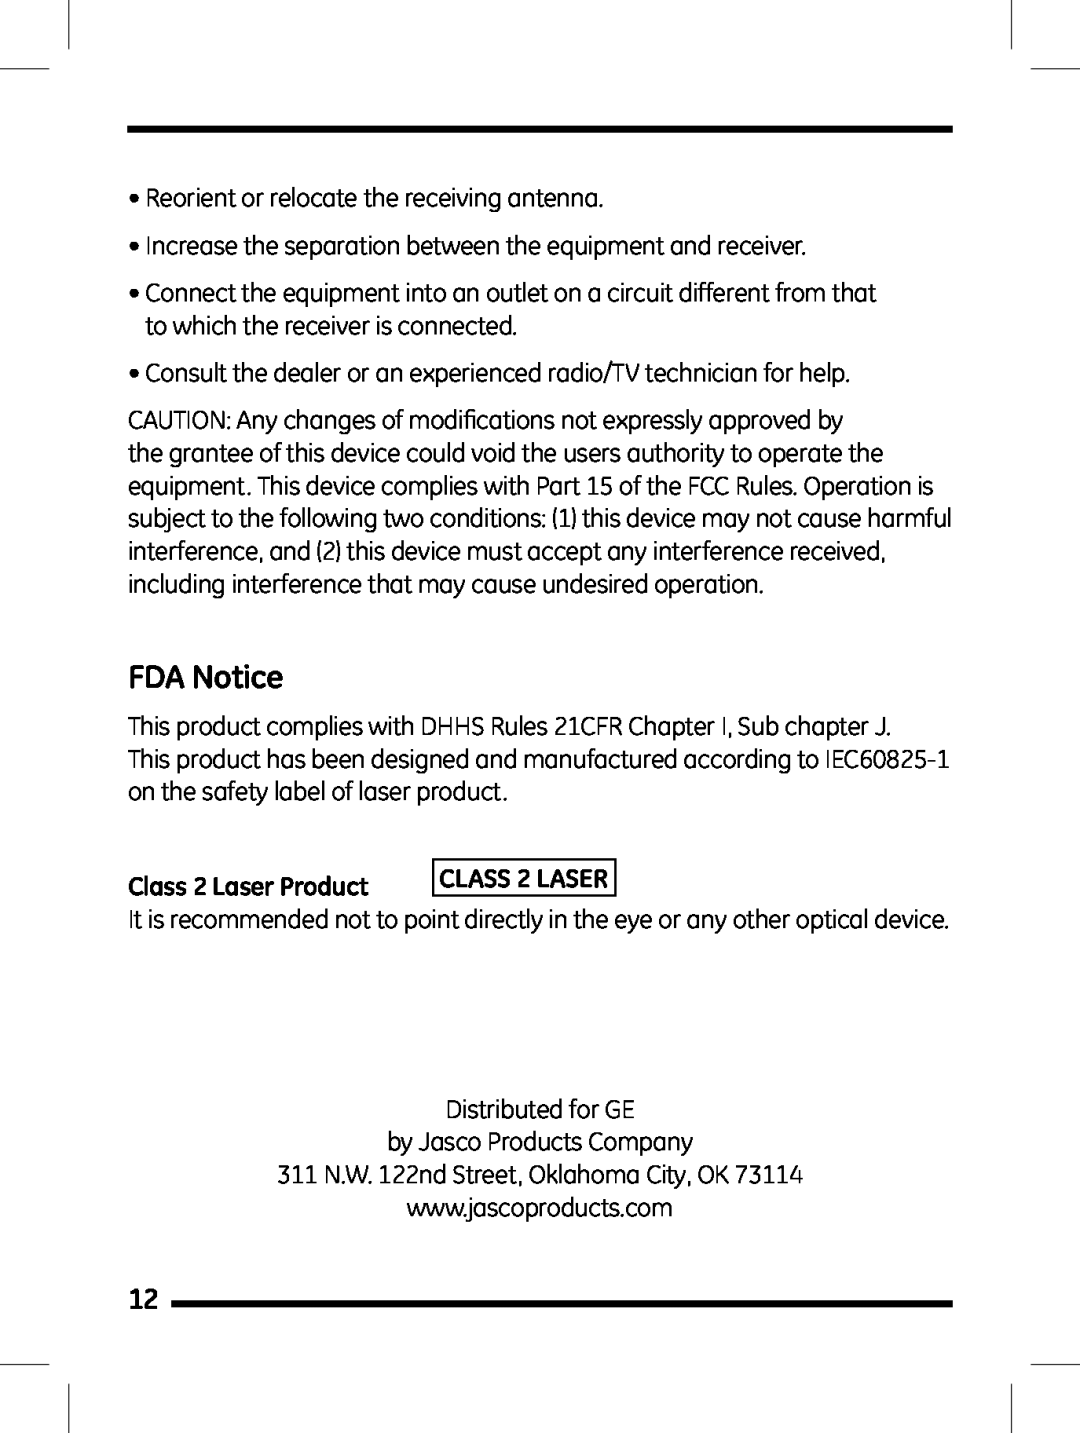 Jasco 98505 instruction manual FDA Notice, Class 2 Laser Product 